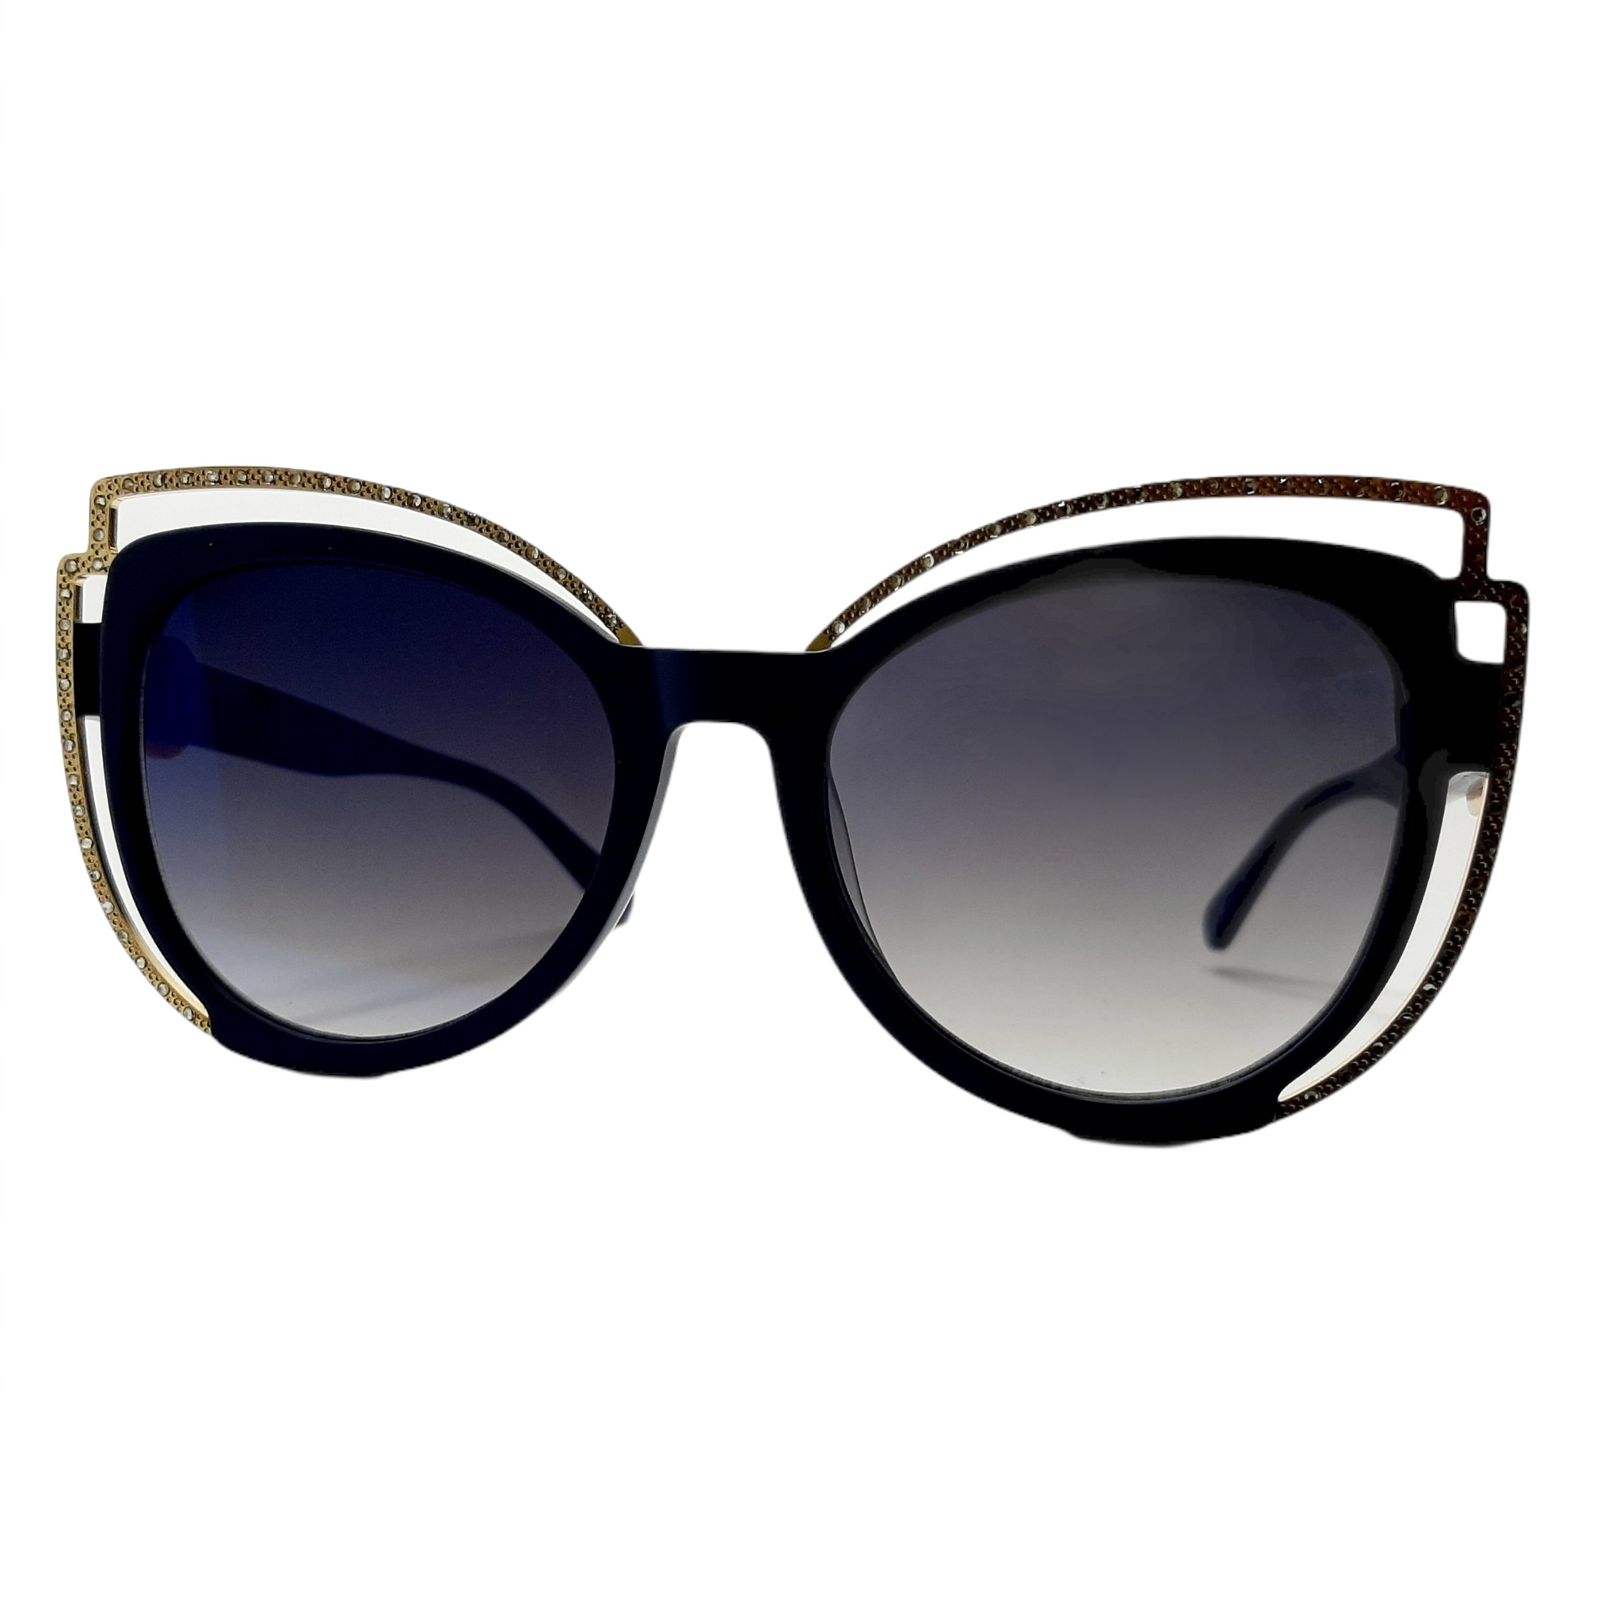 عینک آفتابی زنانه روبرتو کاوالی مدل 2034c6 -  - 1